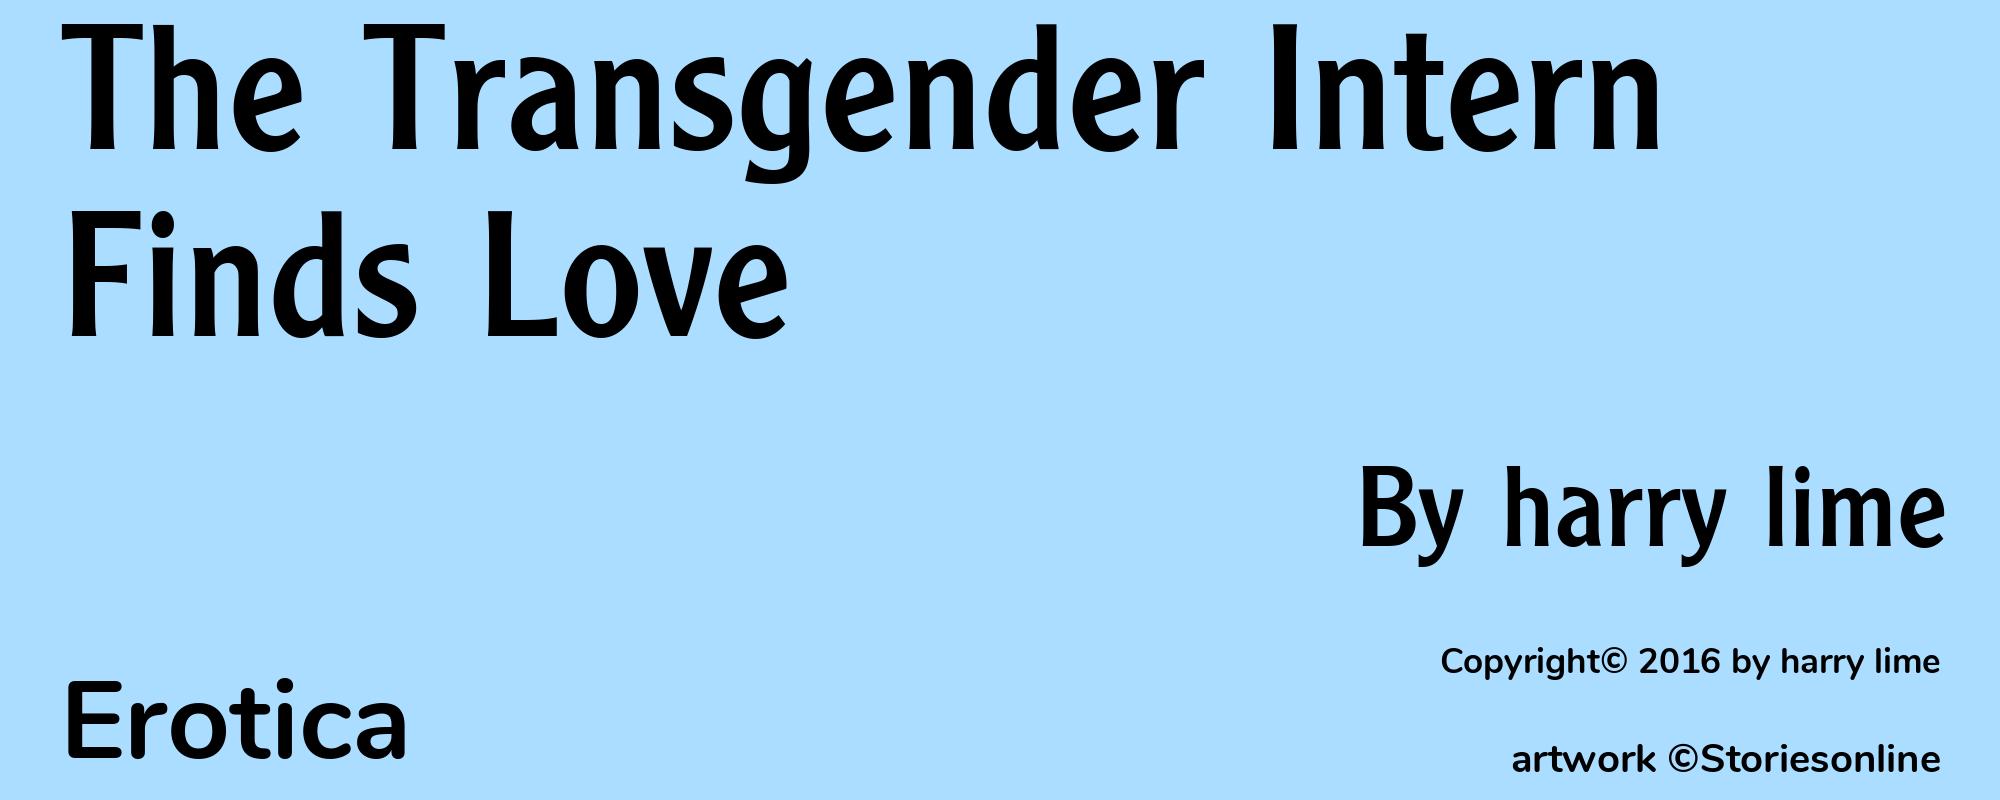 The Transgender Intern Finds Love - Cover